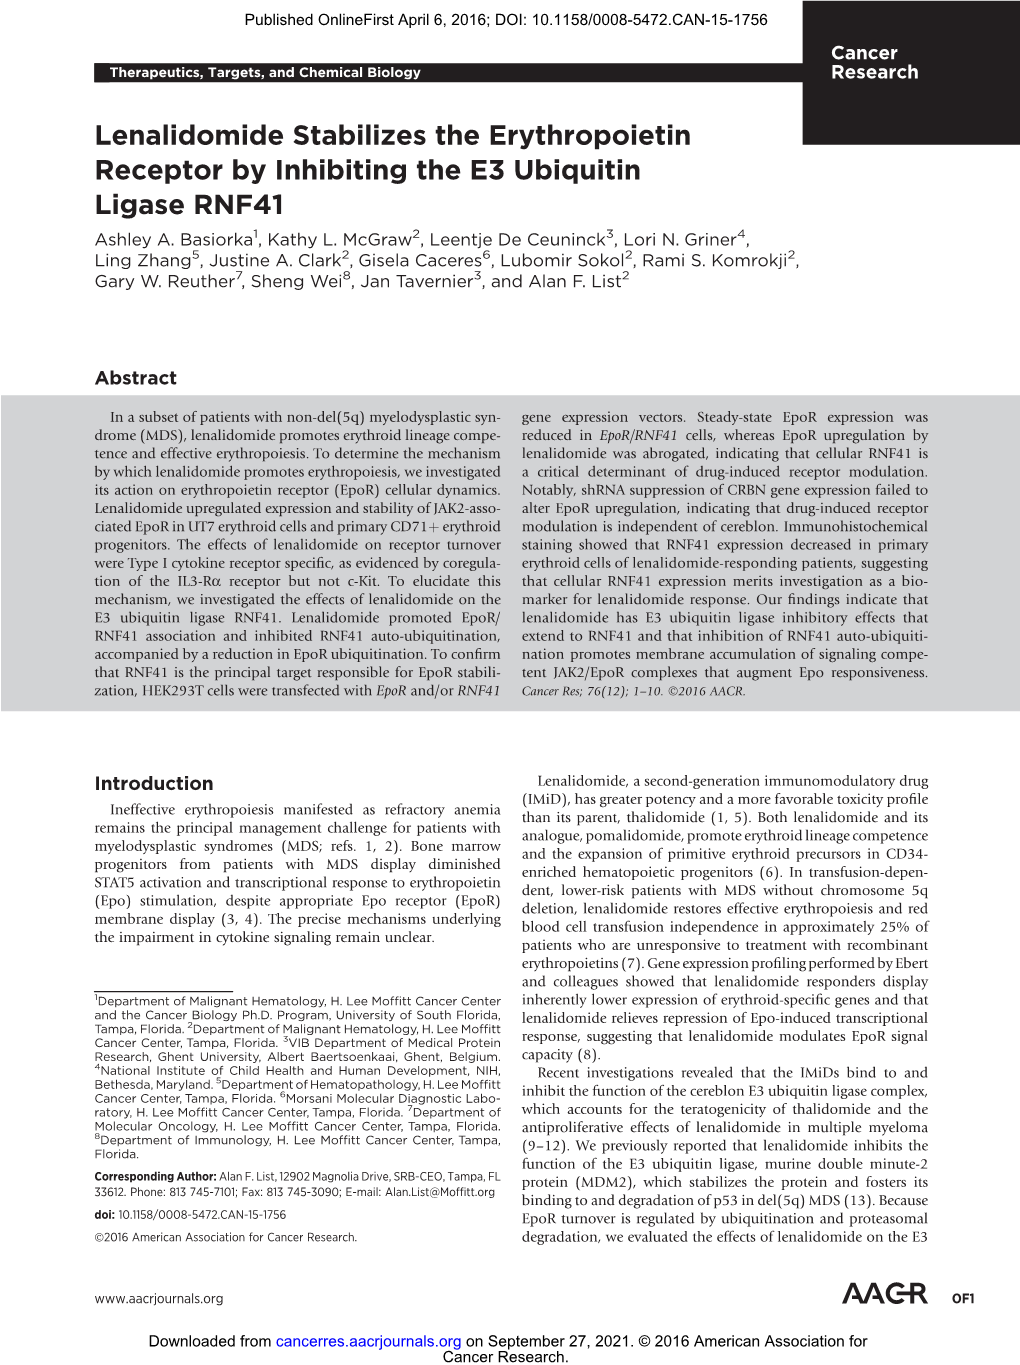 Lenalidomide Stabilizes the Erythropoietin Receptor by Inhibiting the E3 Ubiquitin Ligase RNF41 Ashley A